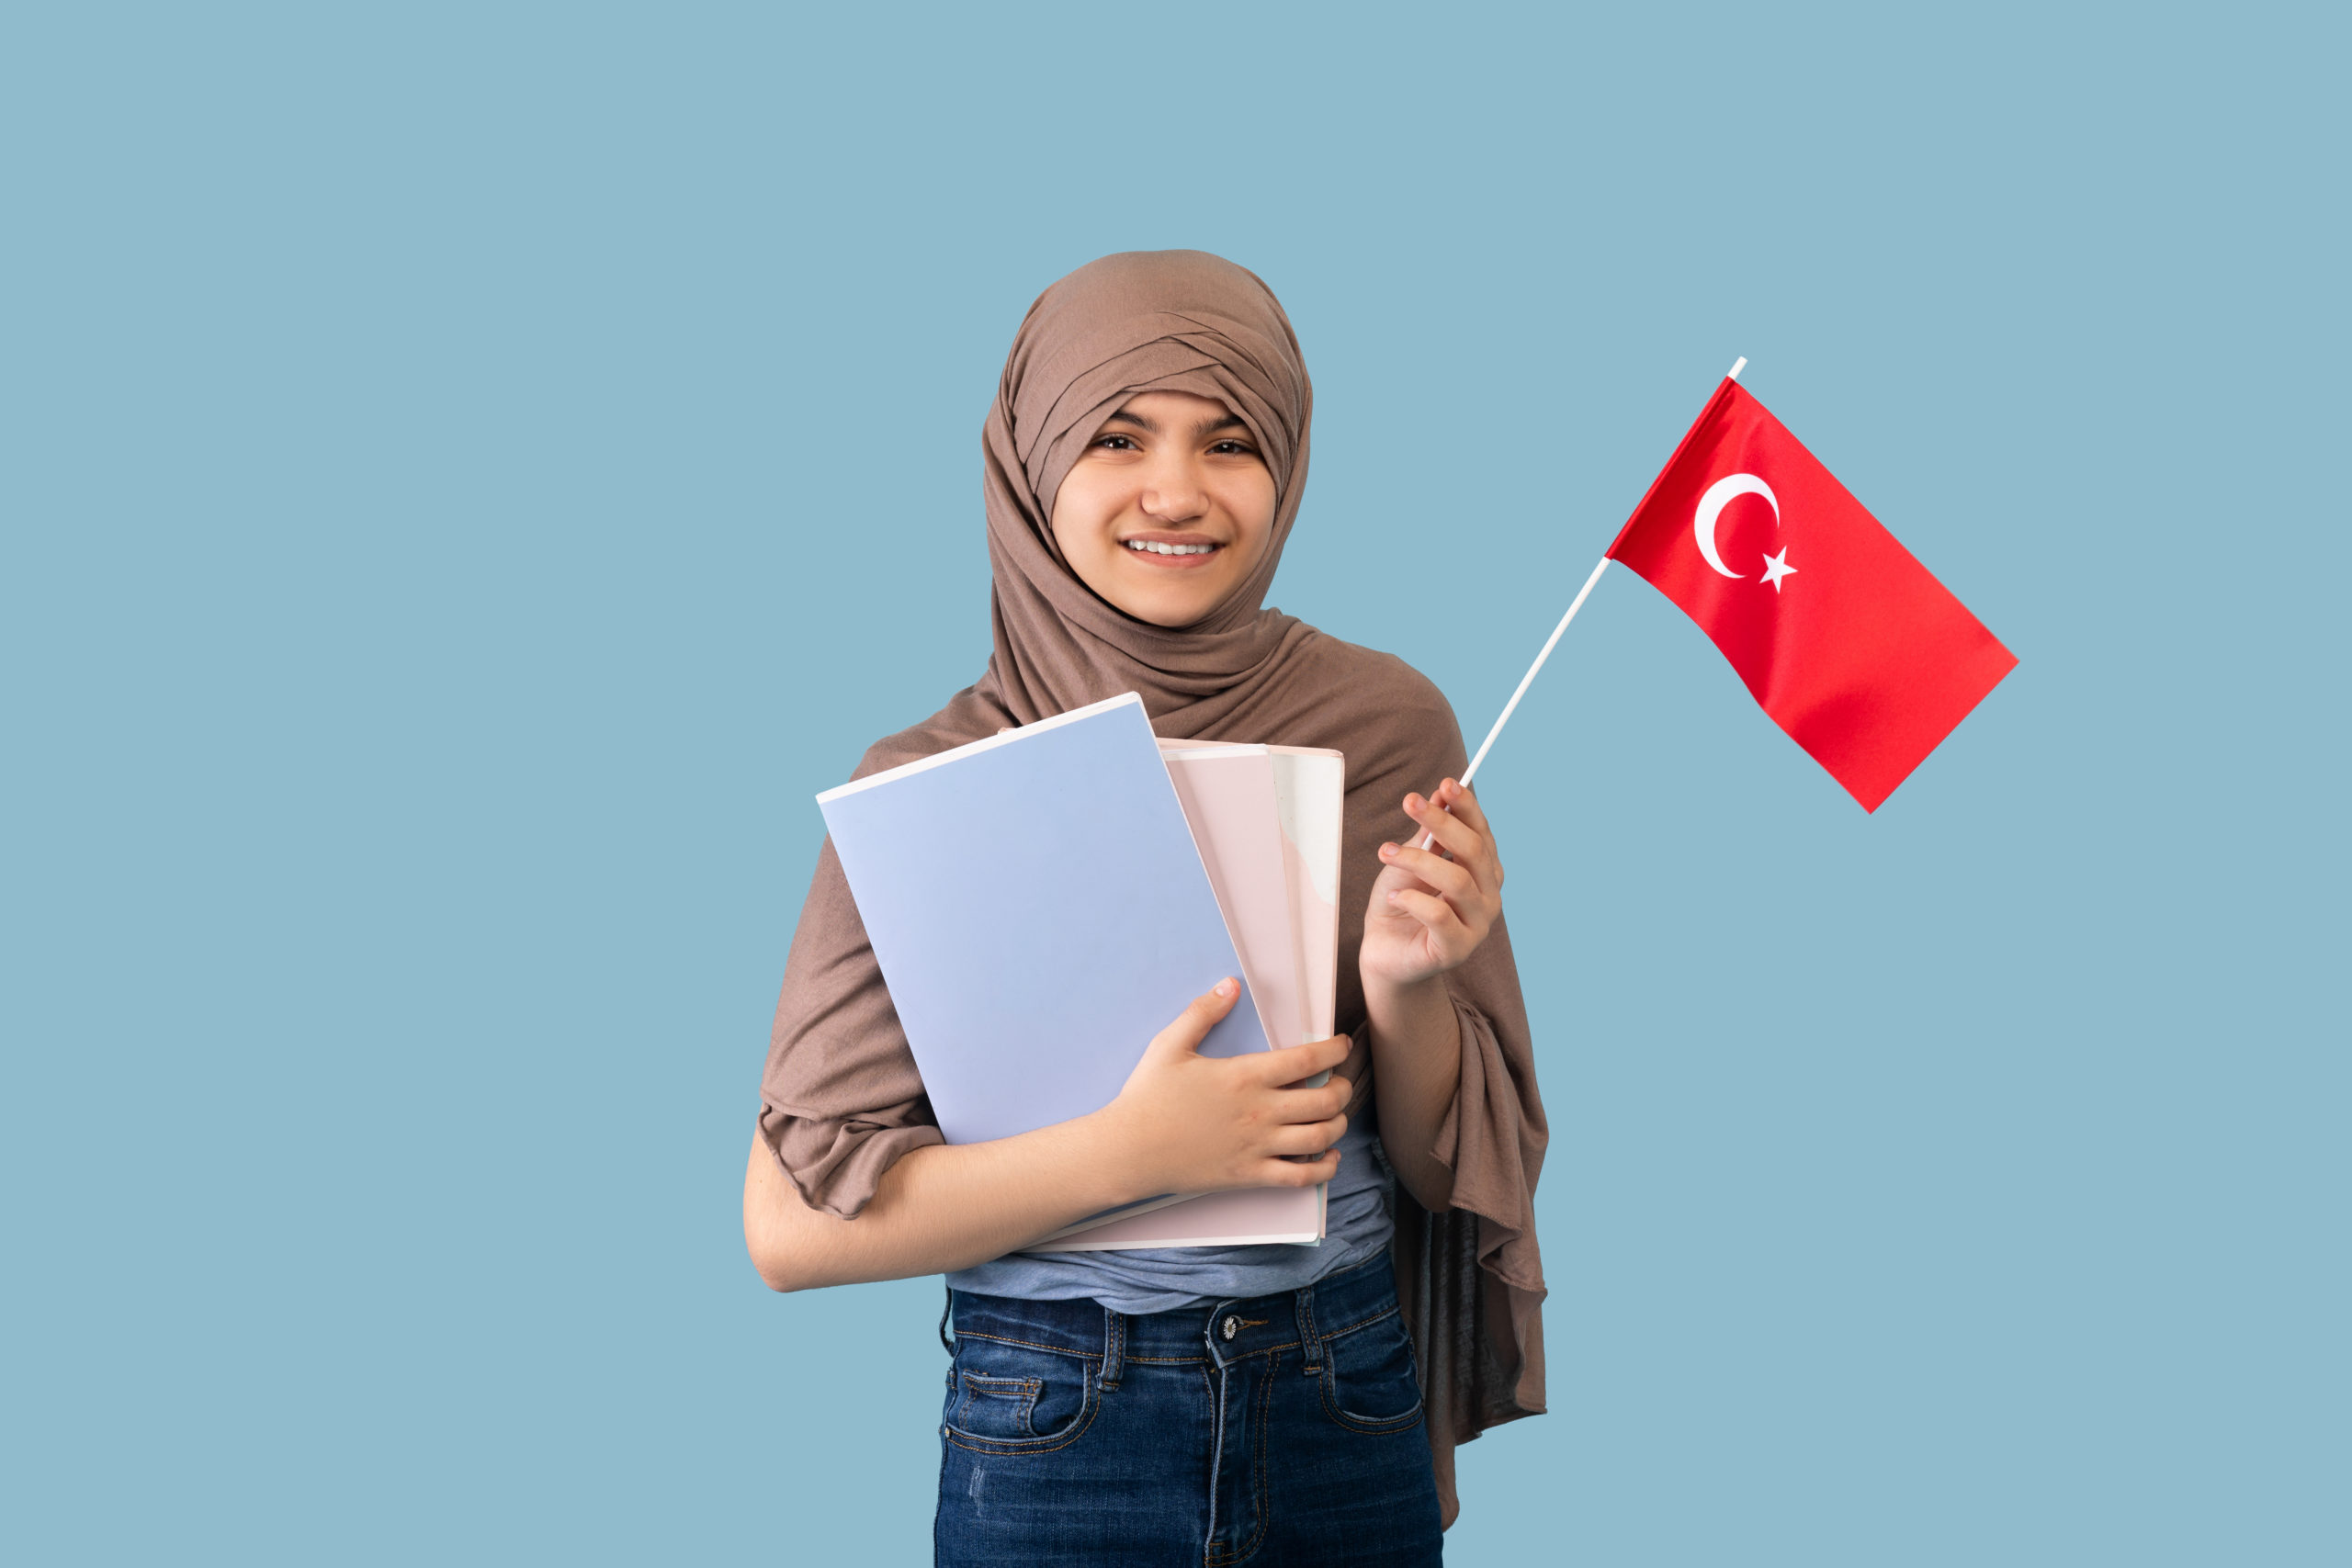 What Language is Spoken in Turkey?